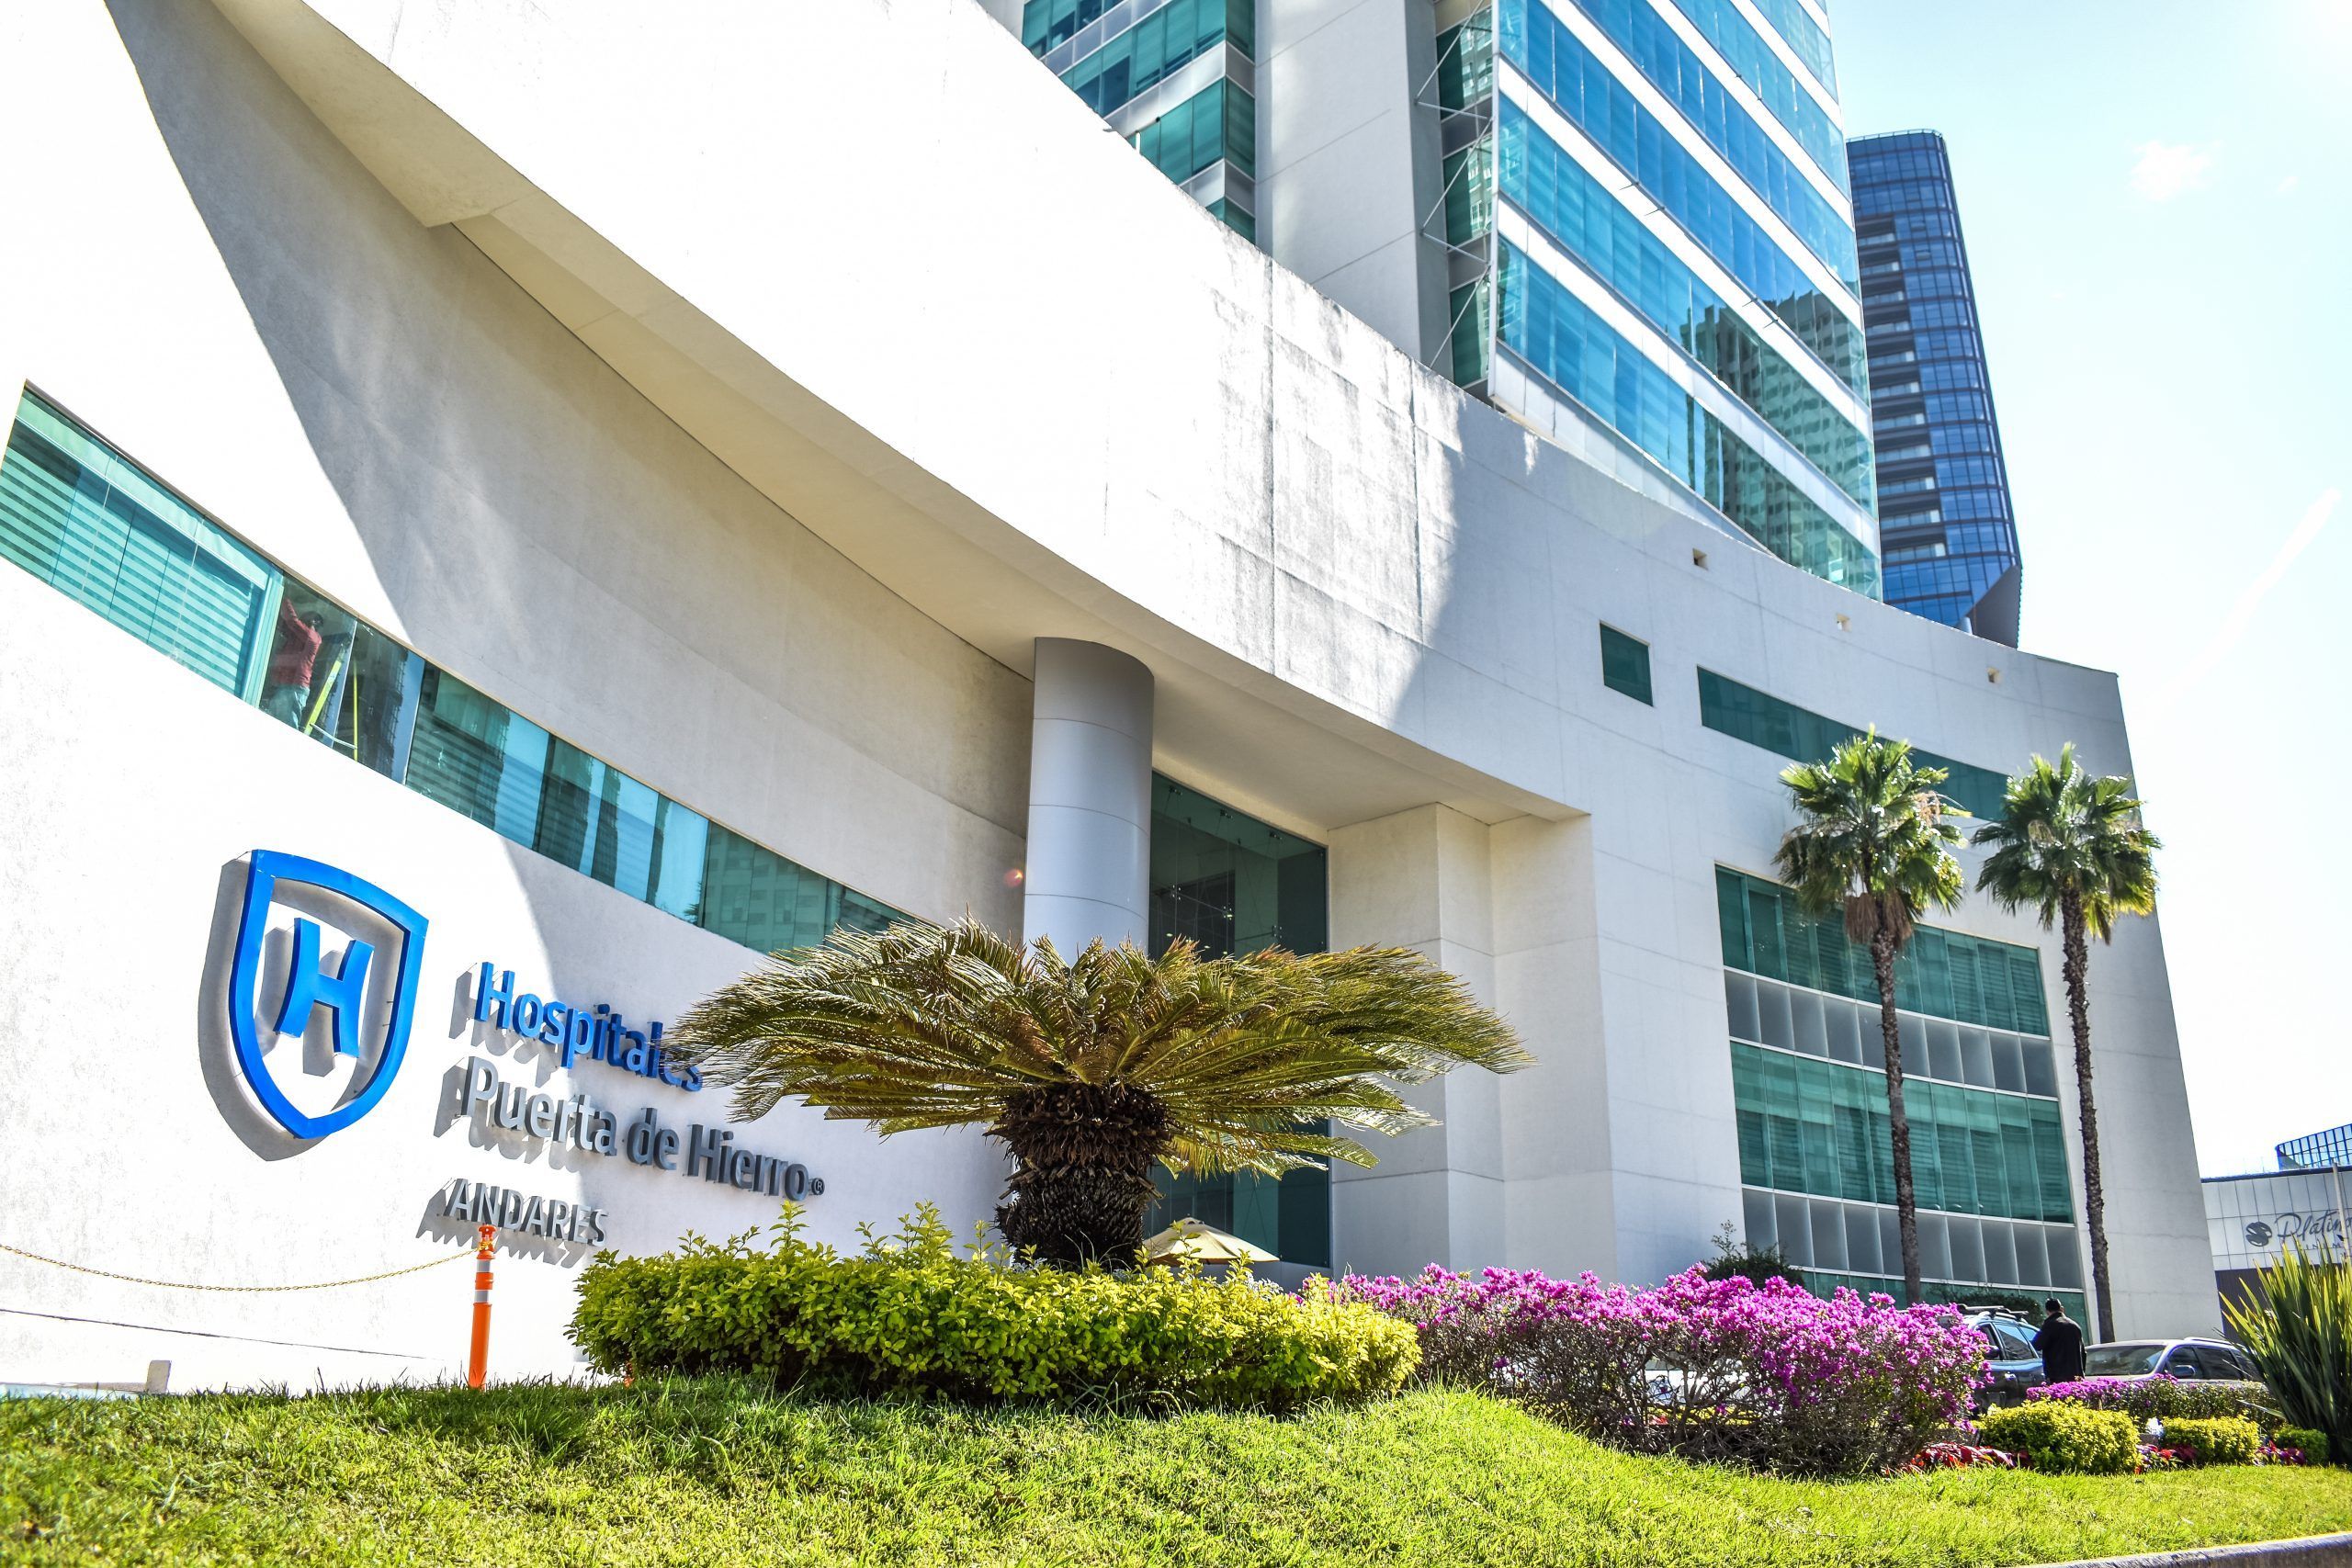 Hospital Puerta de Hierro Andares tower Elite